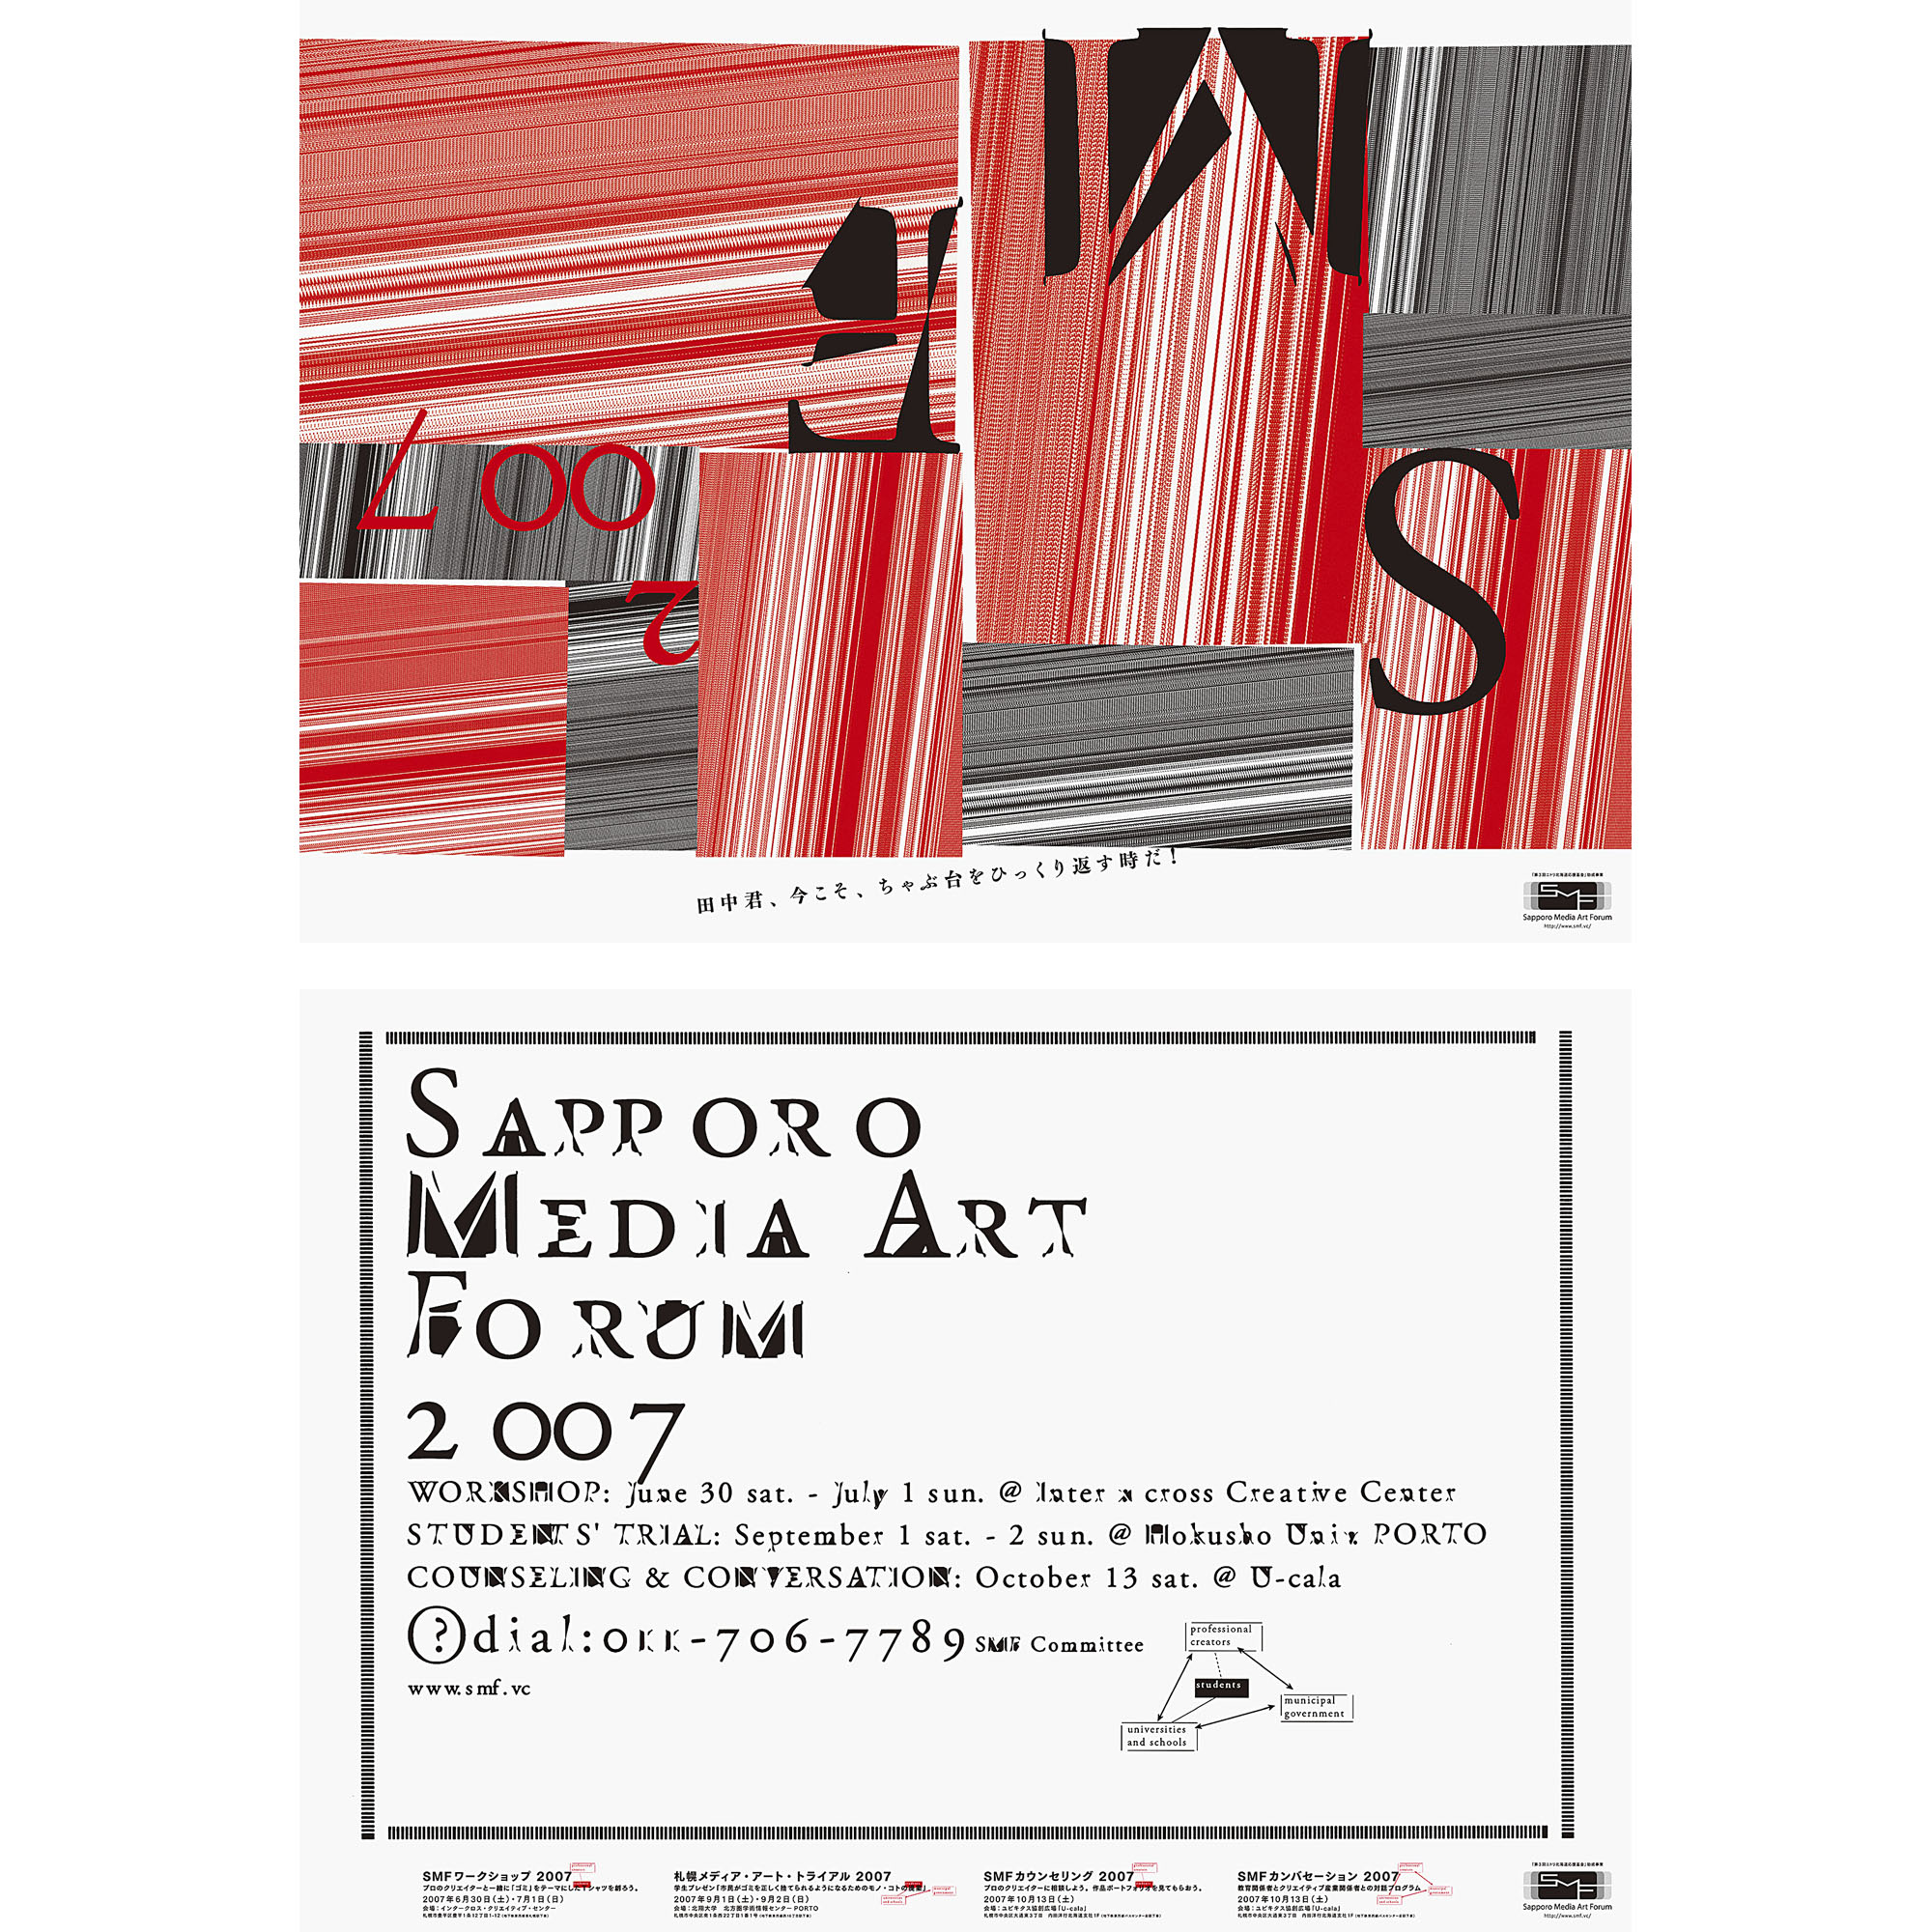 Sapporo Media Art Forum 2007